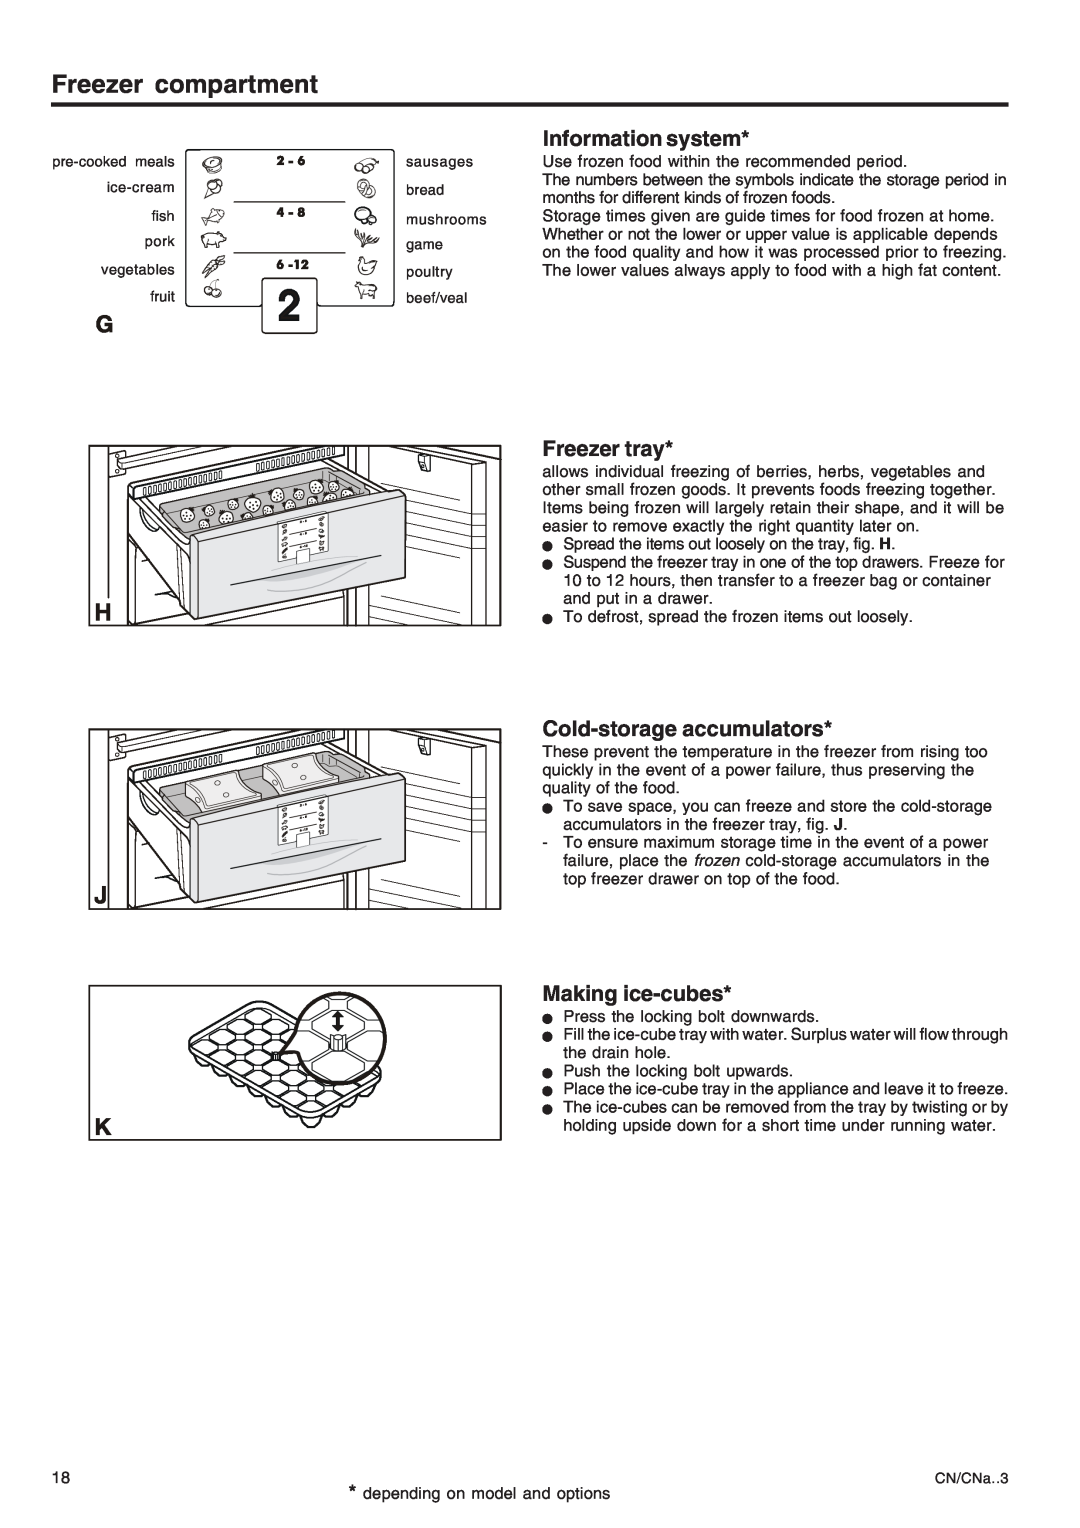 Liebherr 7082 224-00 Information system, Freezer tray, Cold-storageaccumulators, Making ice-cubes, Freezer compartment 